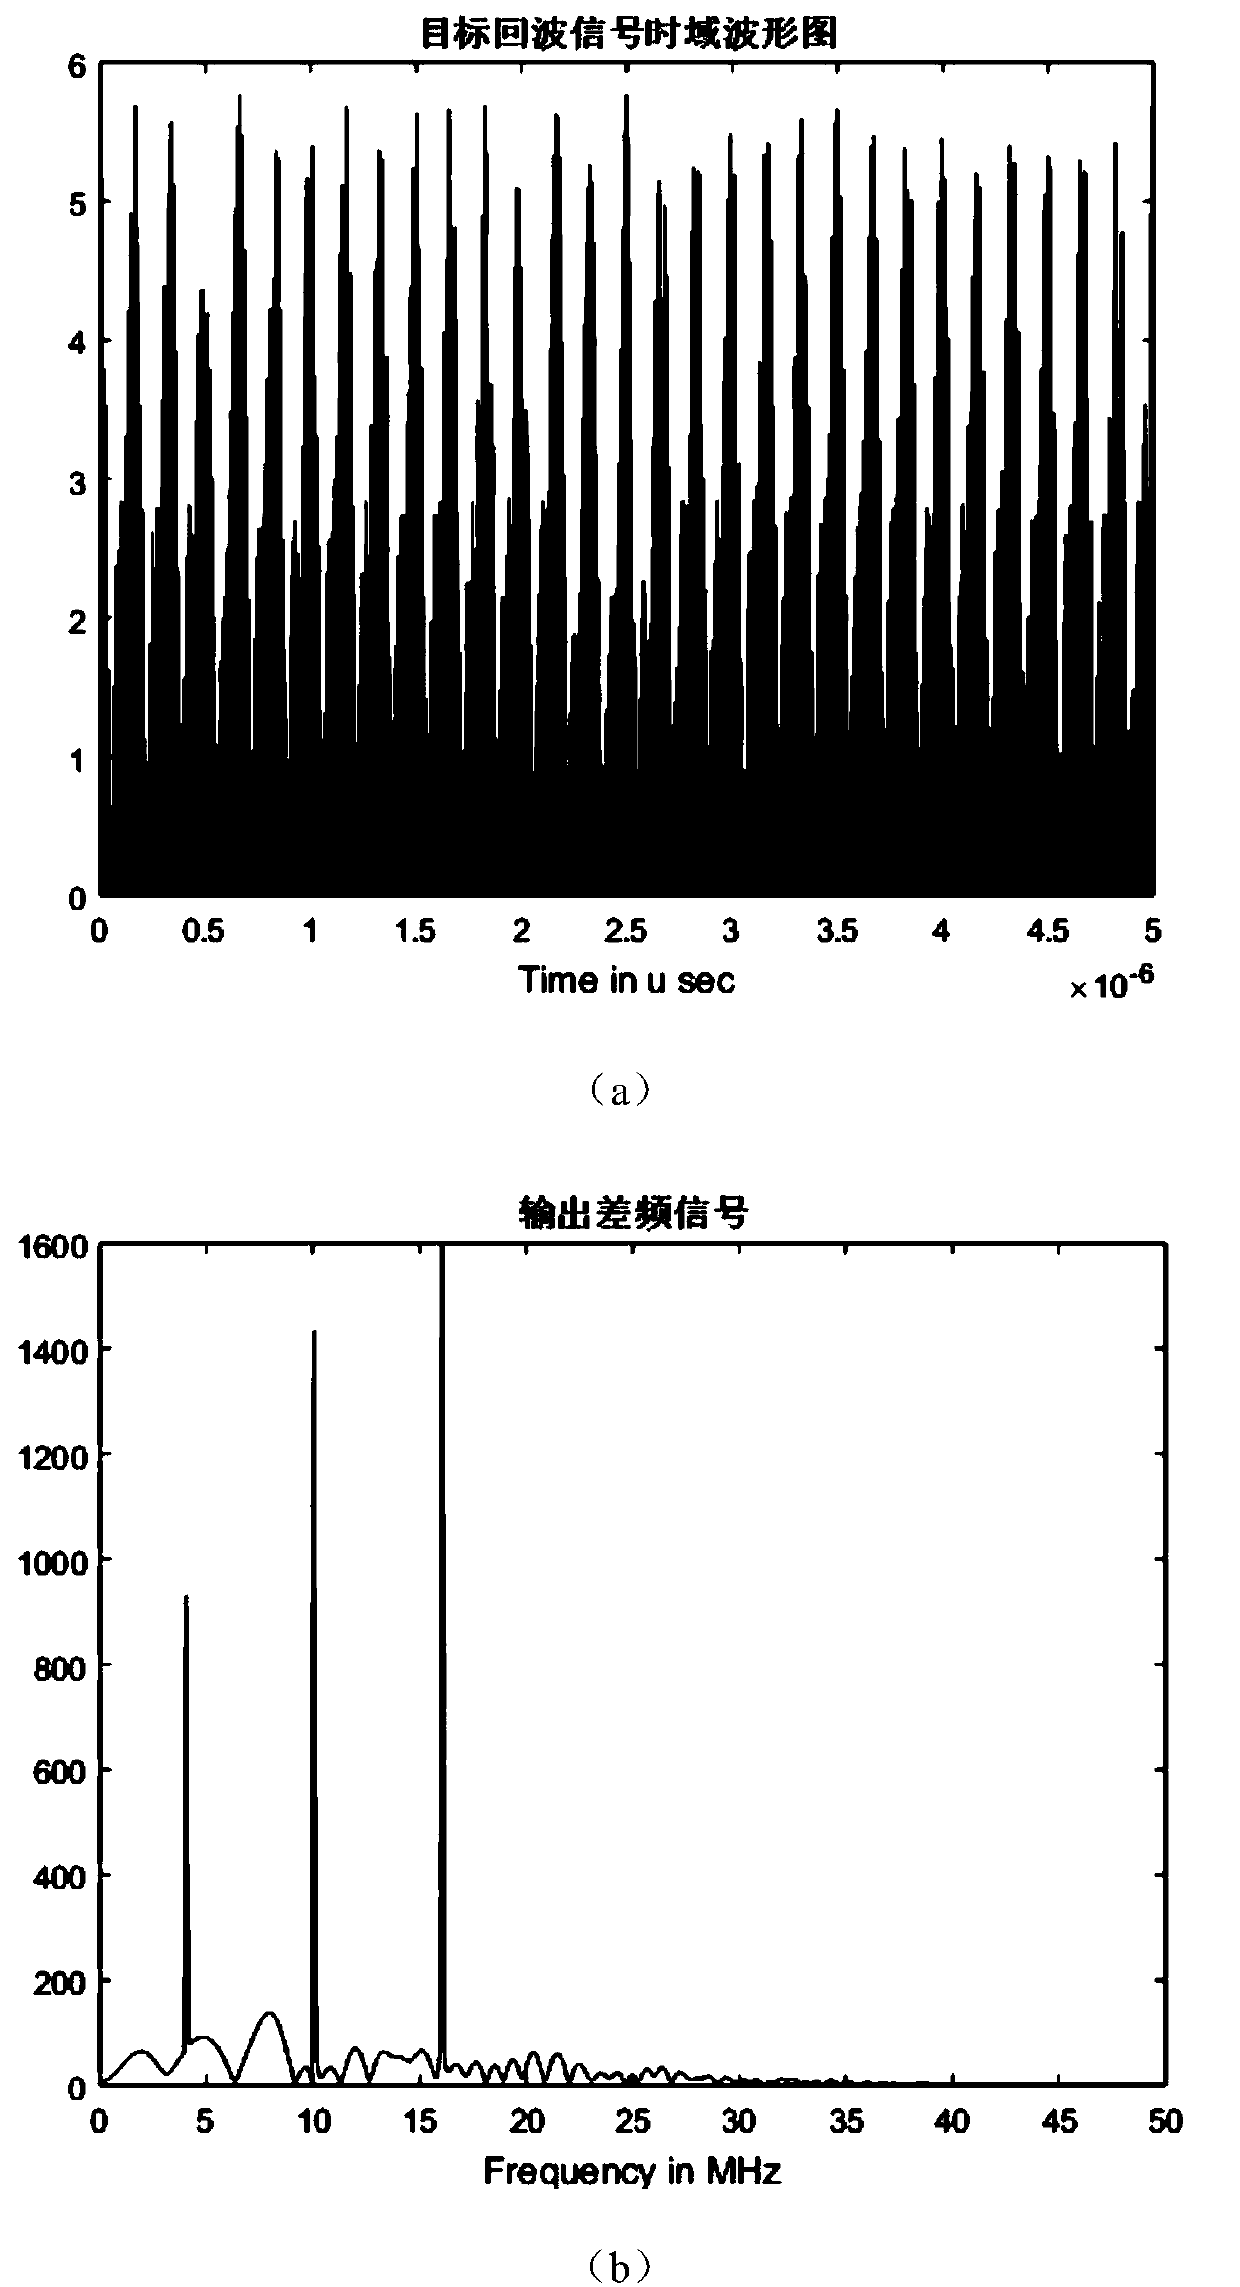 Linear frequency modulation radar signal processing method based on compressed sensing